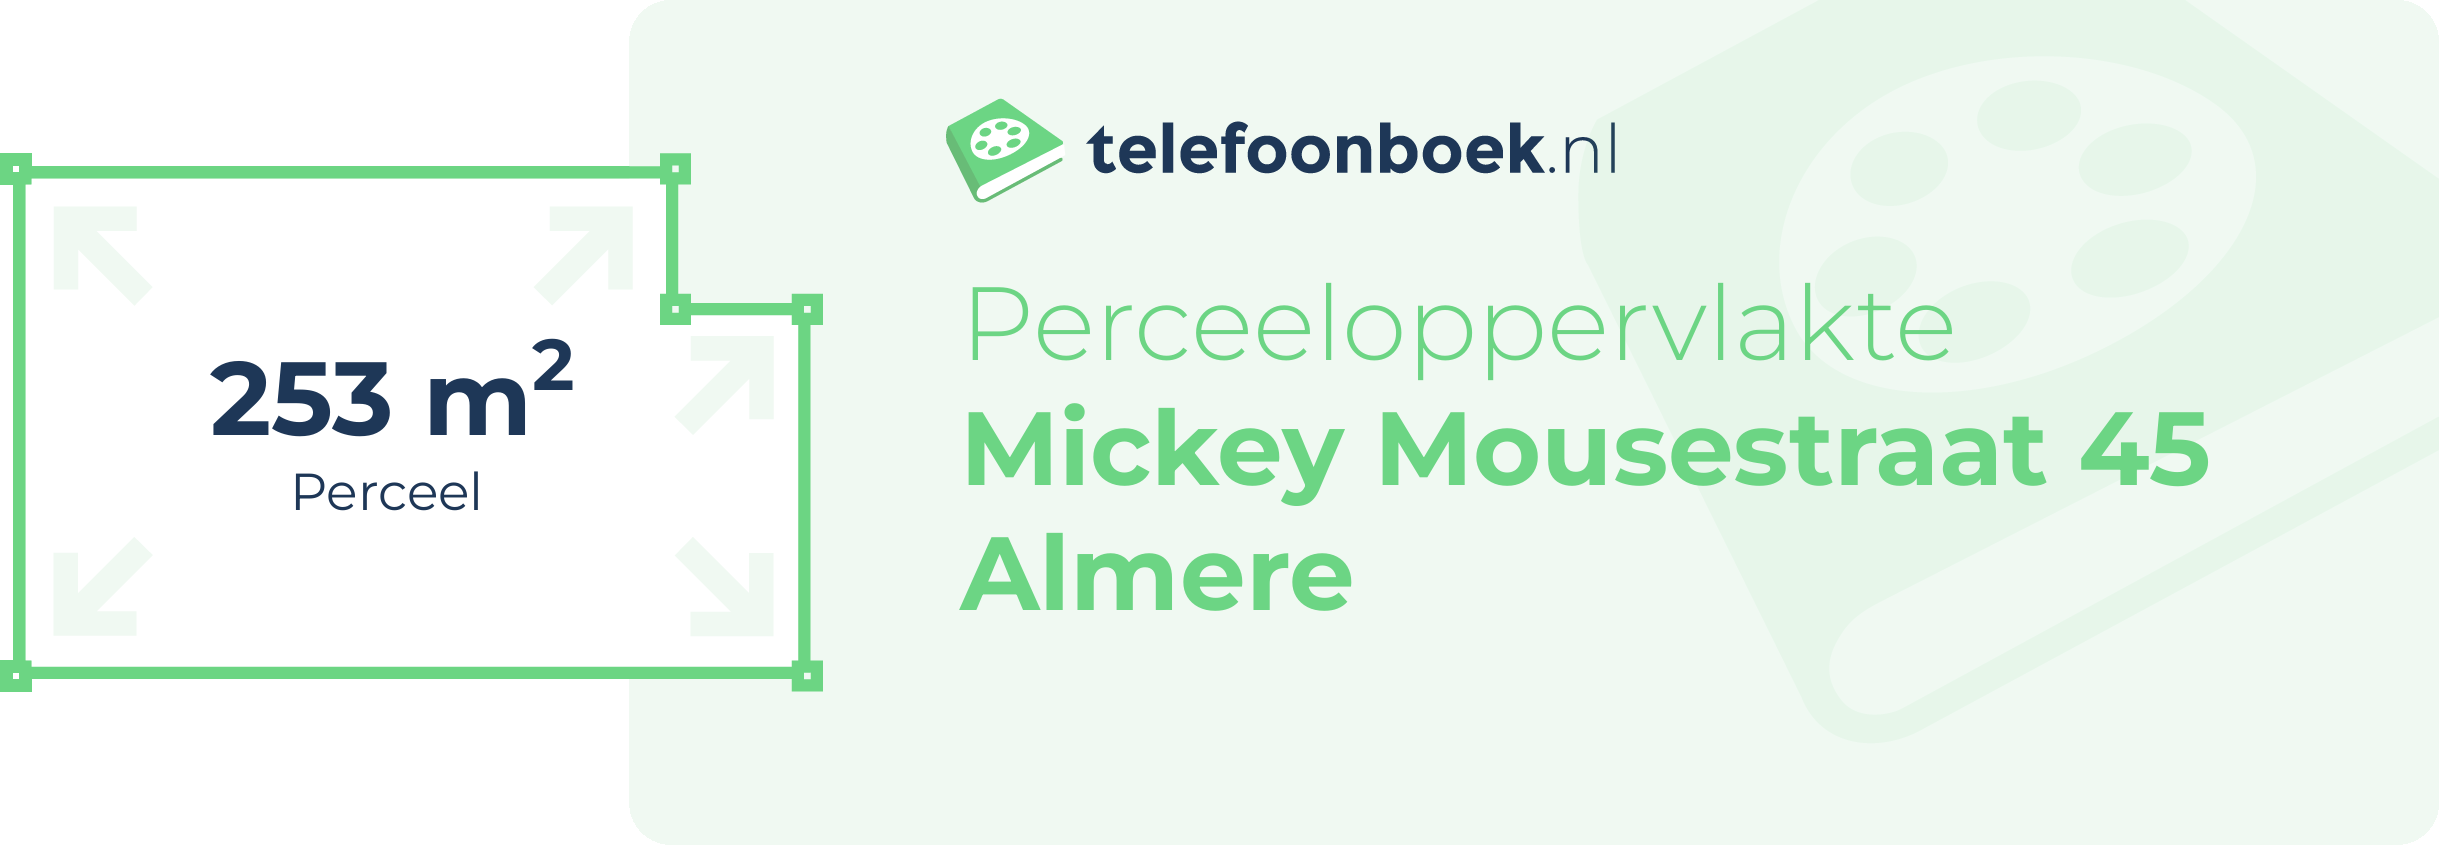 Perceeloppervlakte Mickey Mousestraat 45 Almere